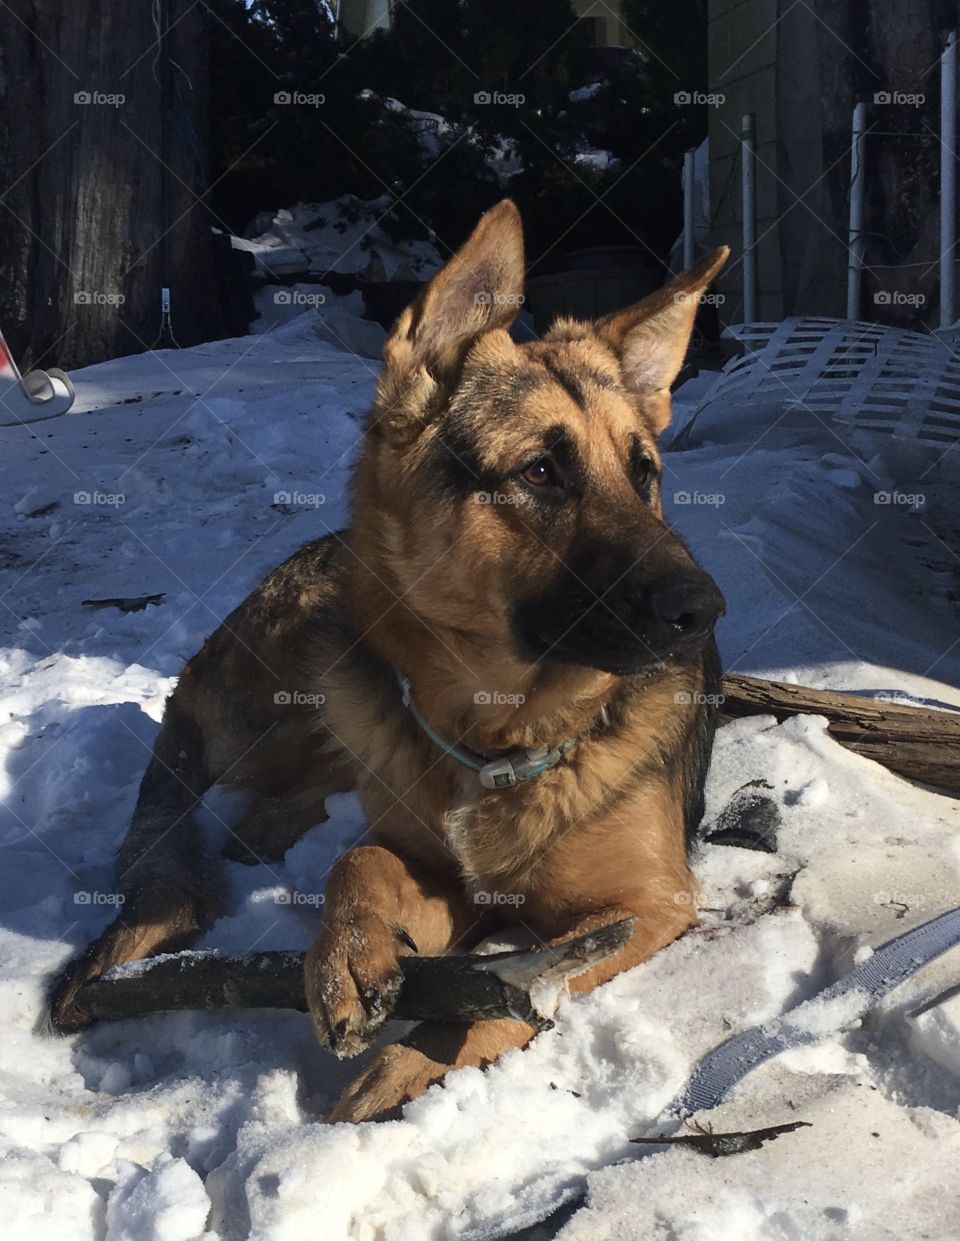 Snow king. Sugar cain. Such a photogenic canine. 